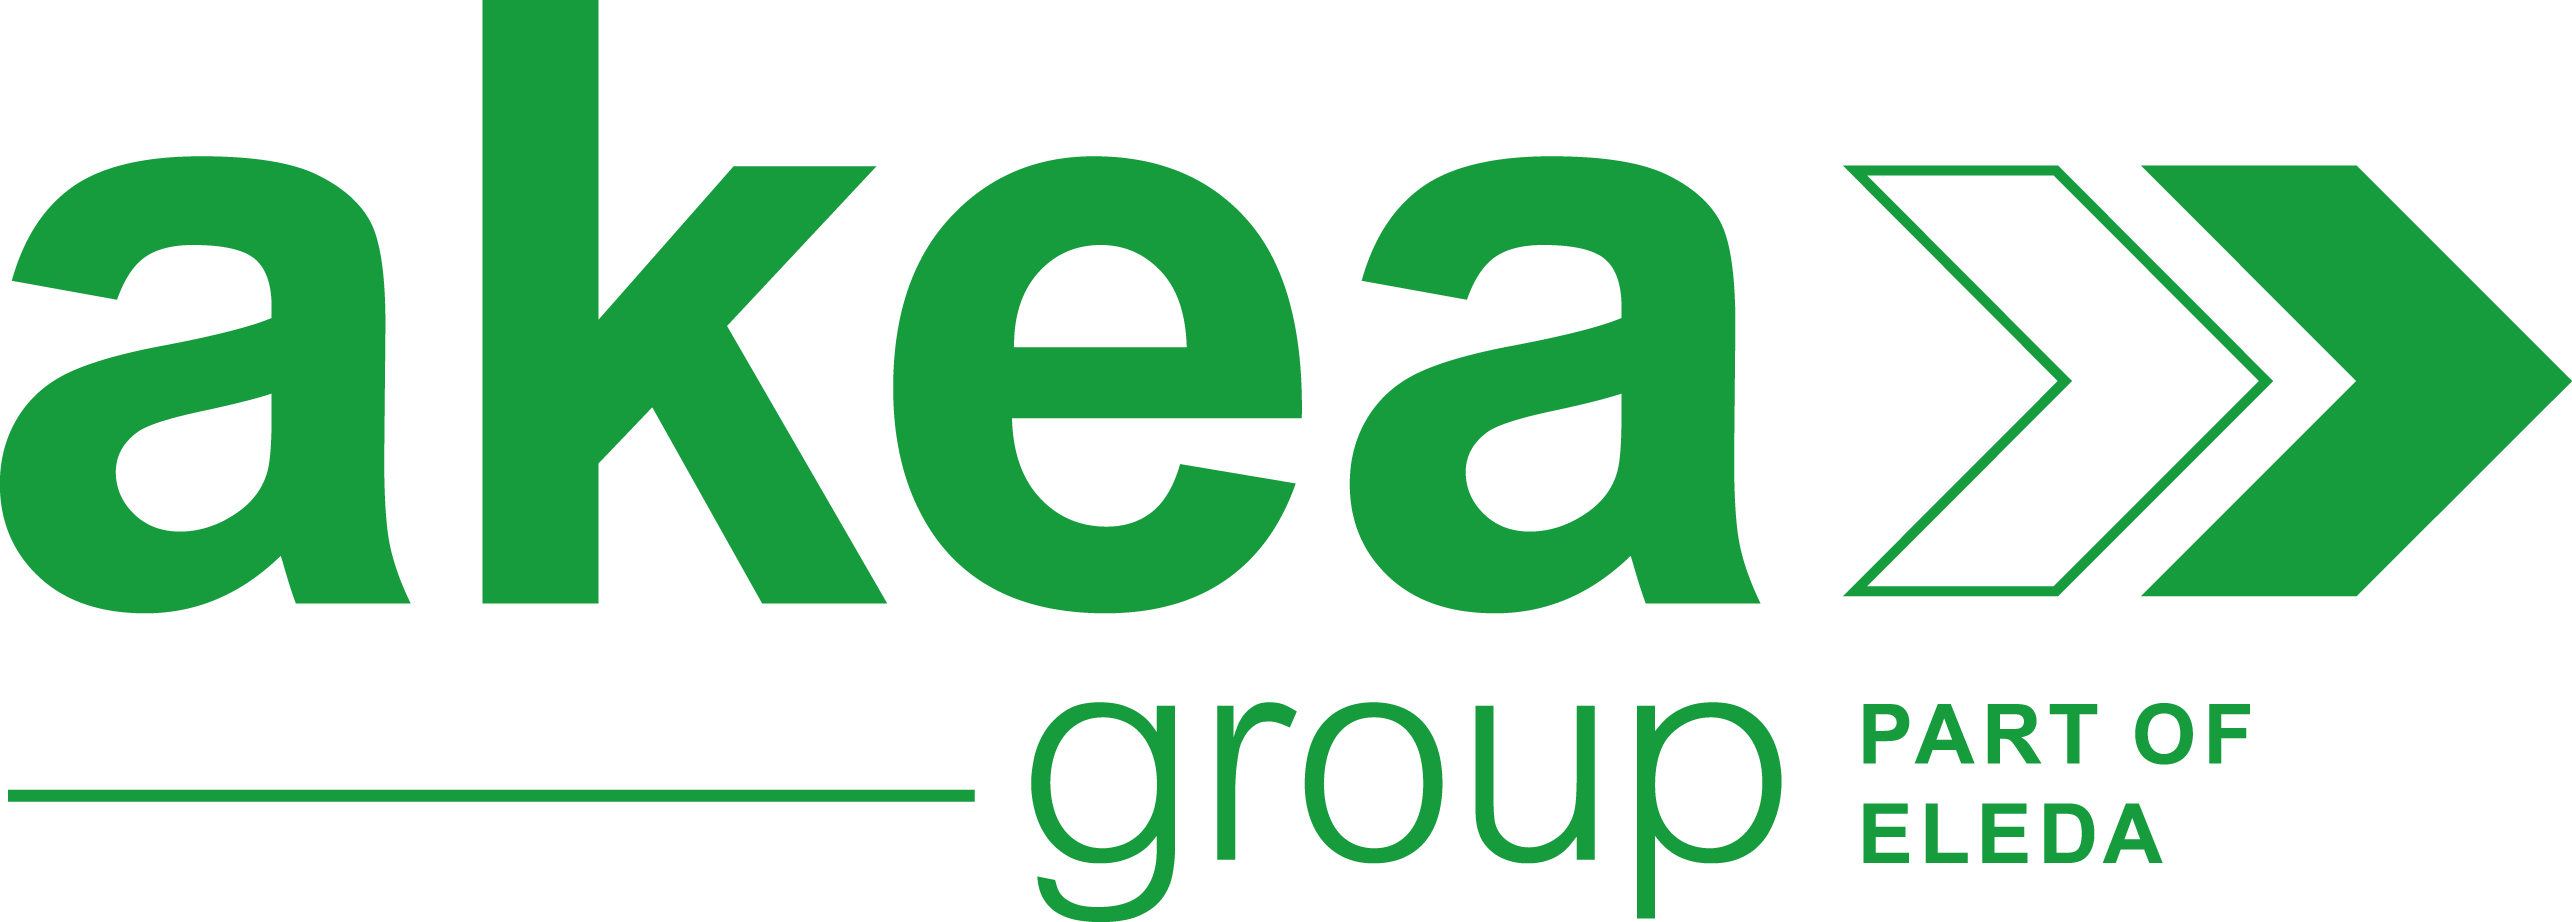 Akea Group Logga